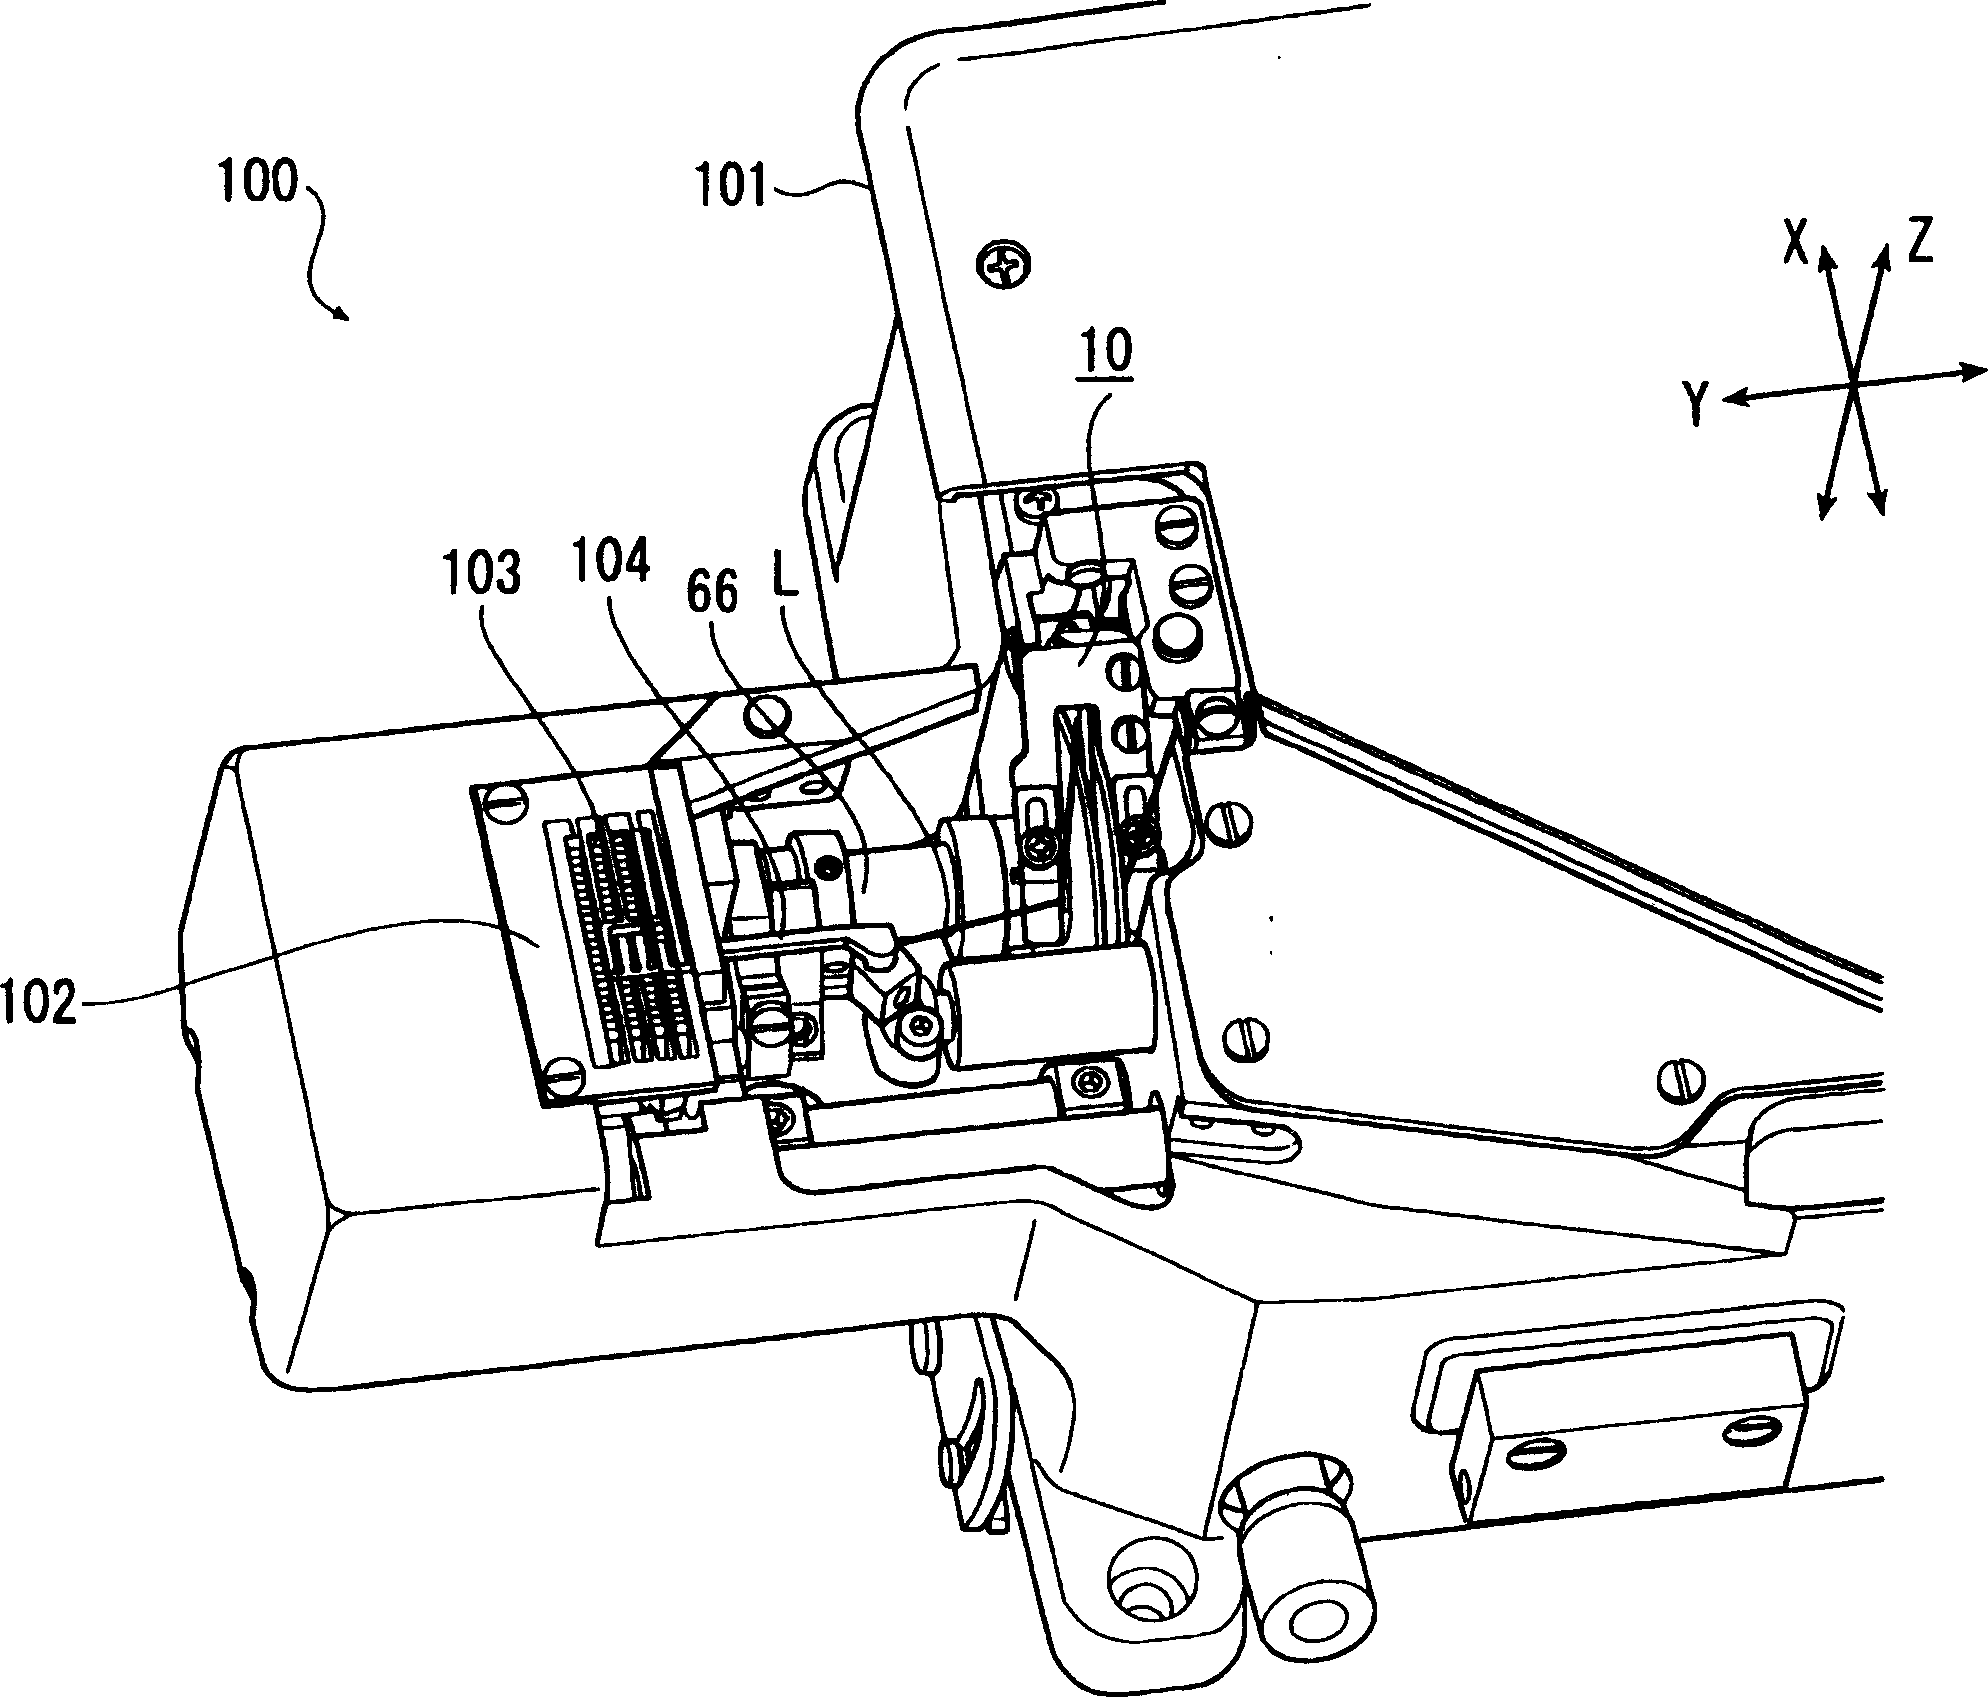 Thread return device of sewing machine